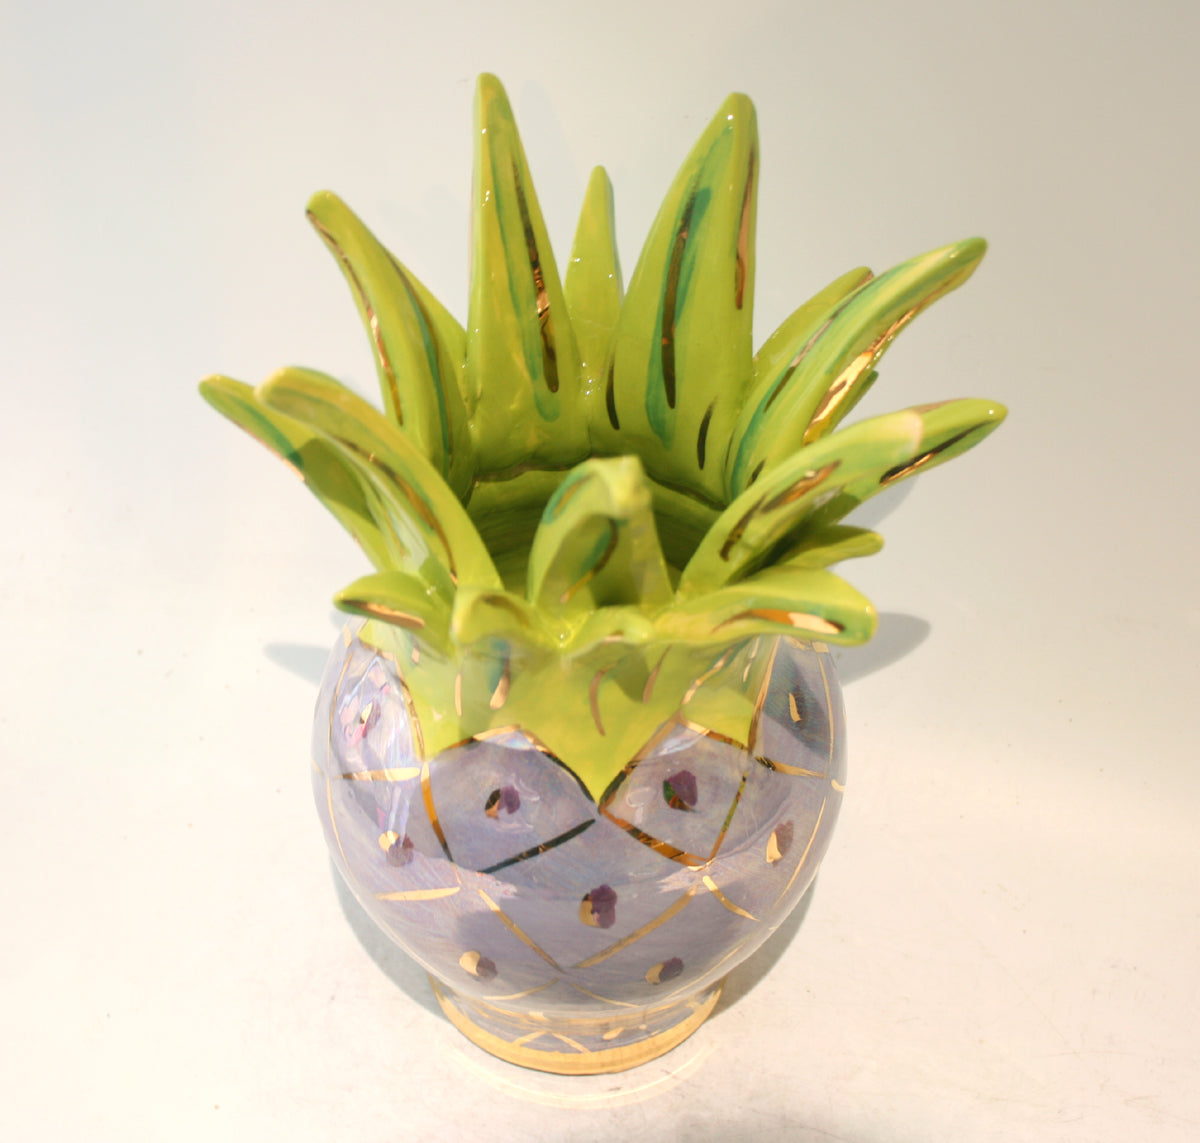 Medium Pineapple Vase in Purple